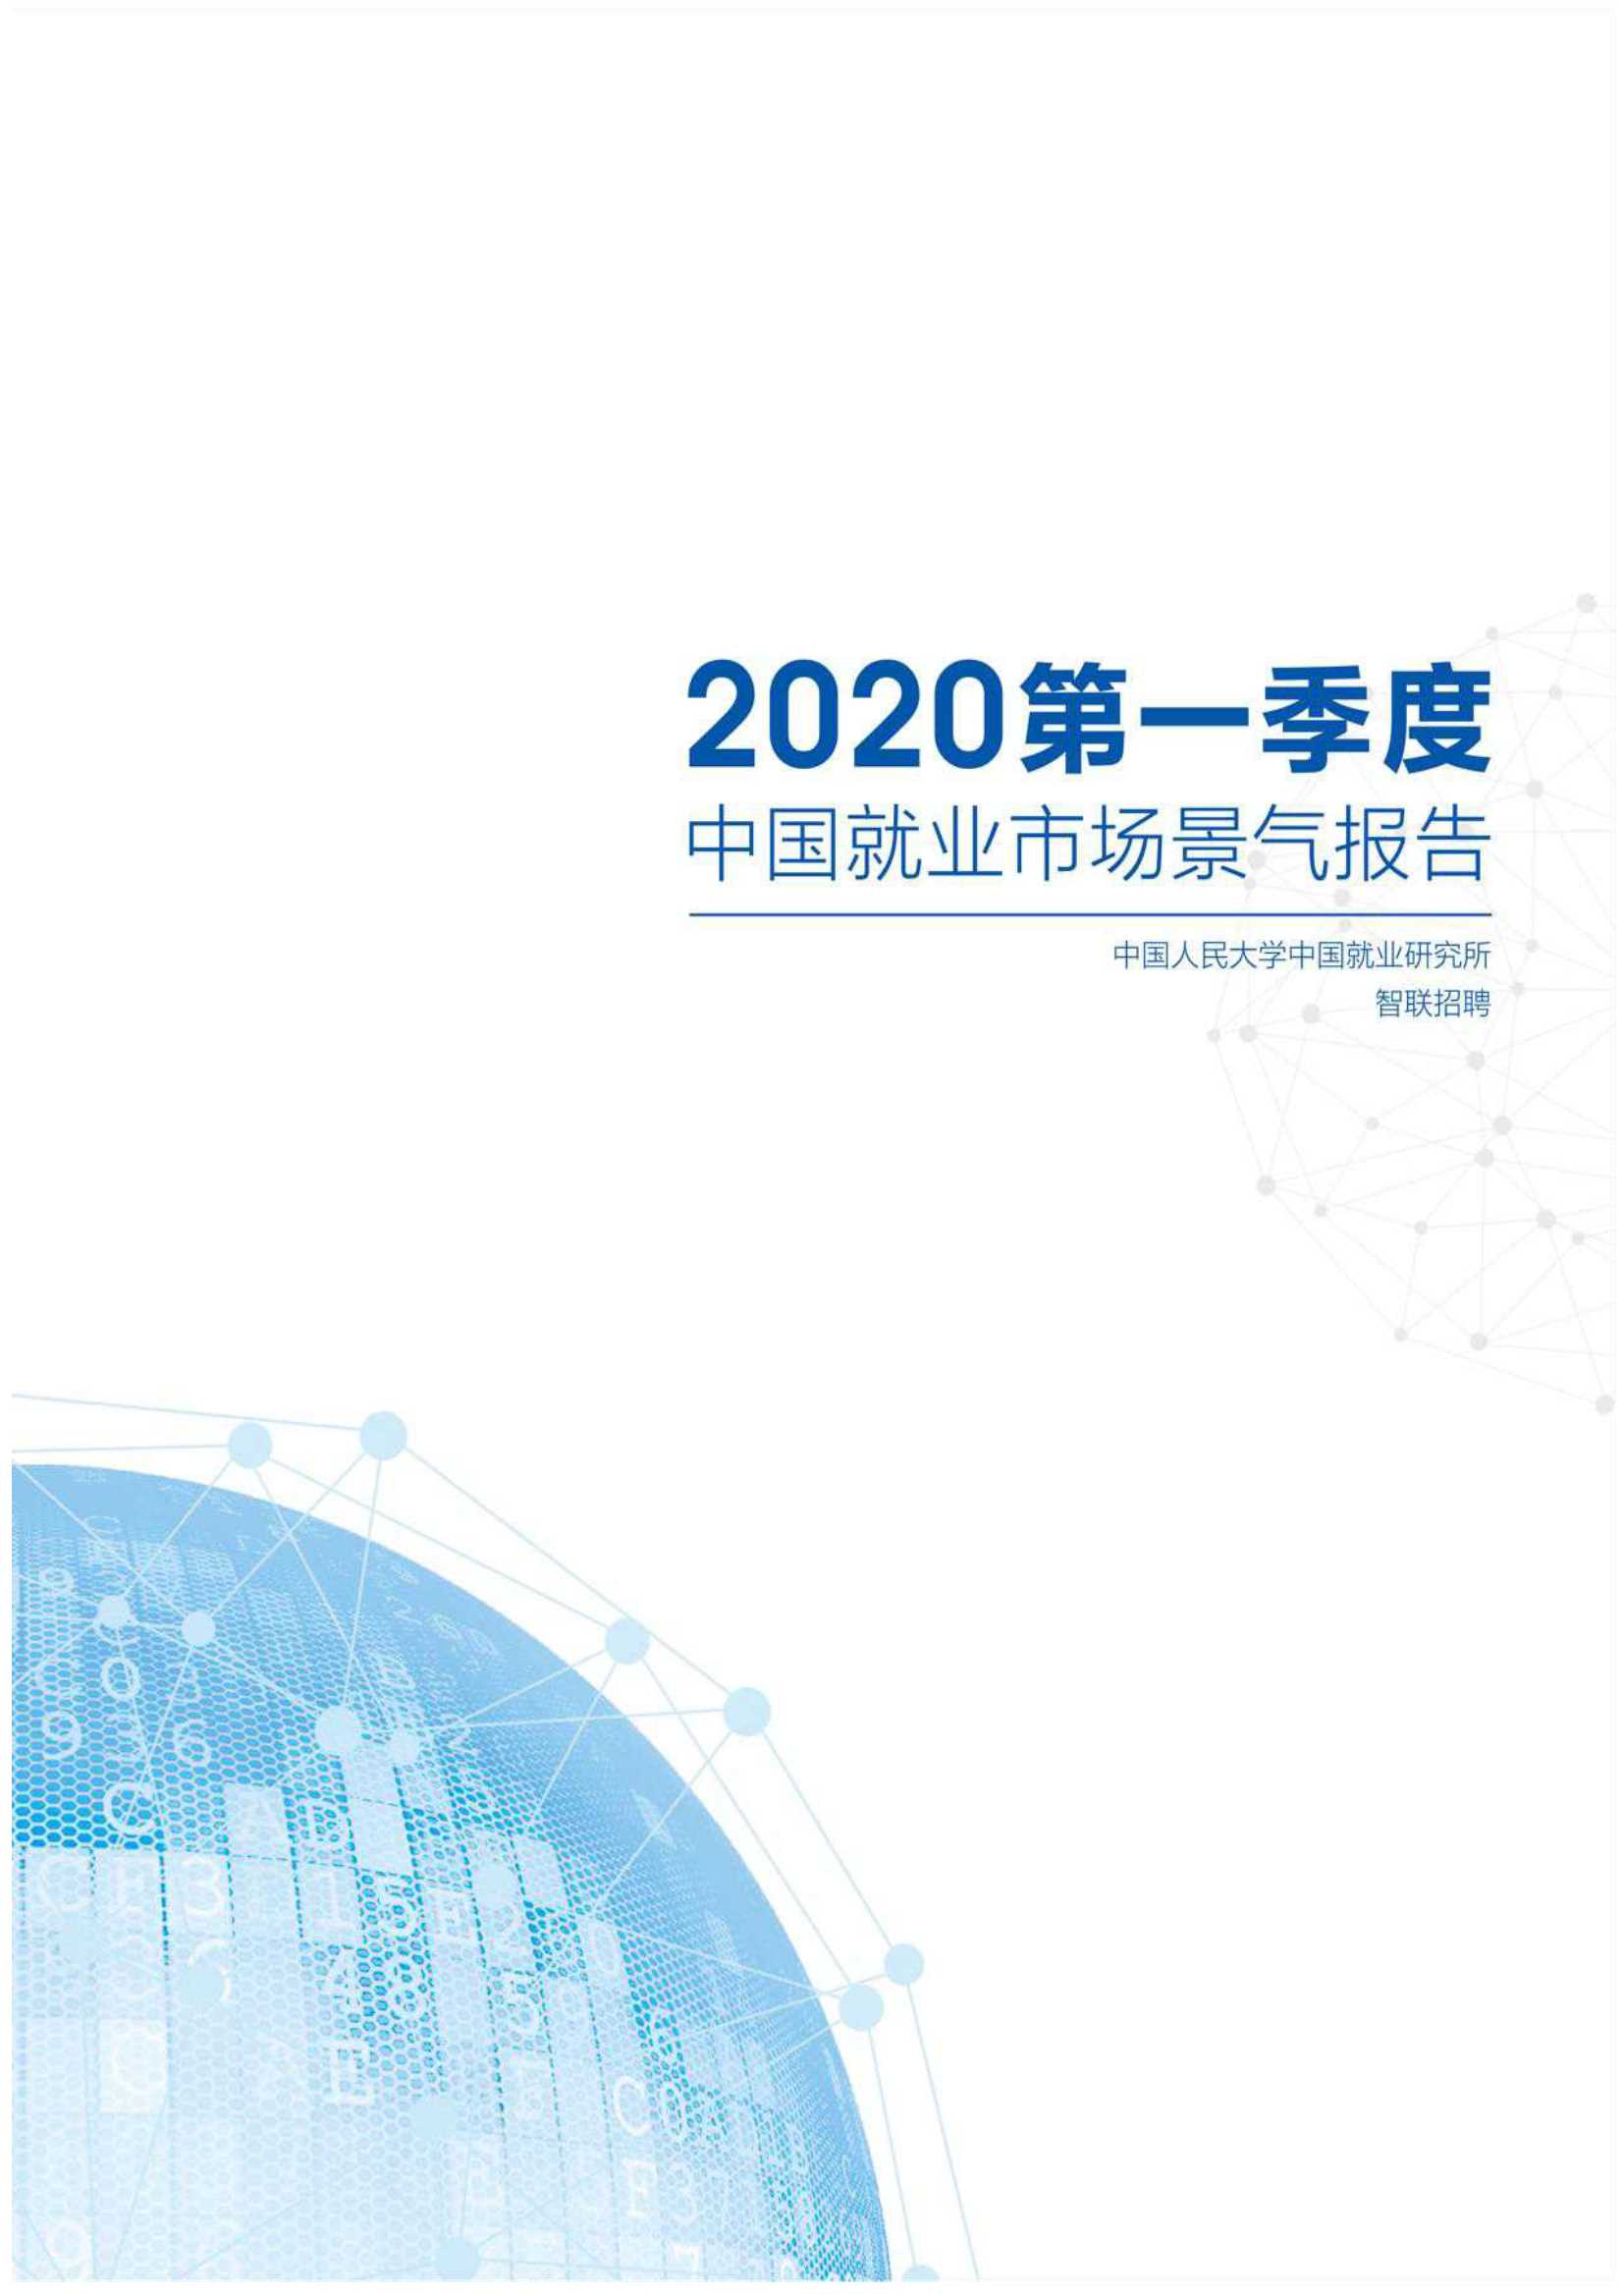 2020Q1中国就业市场景气报告-人大 智联招聘-2020.04-29页